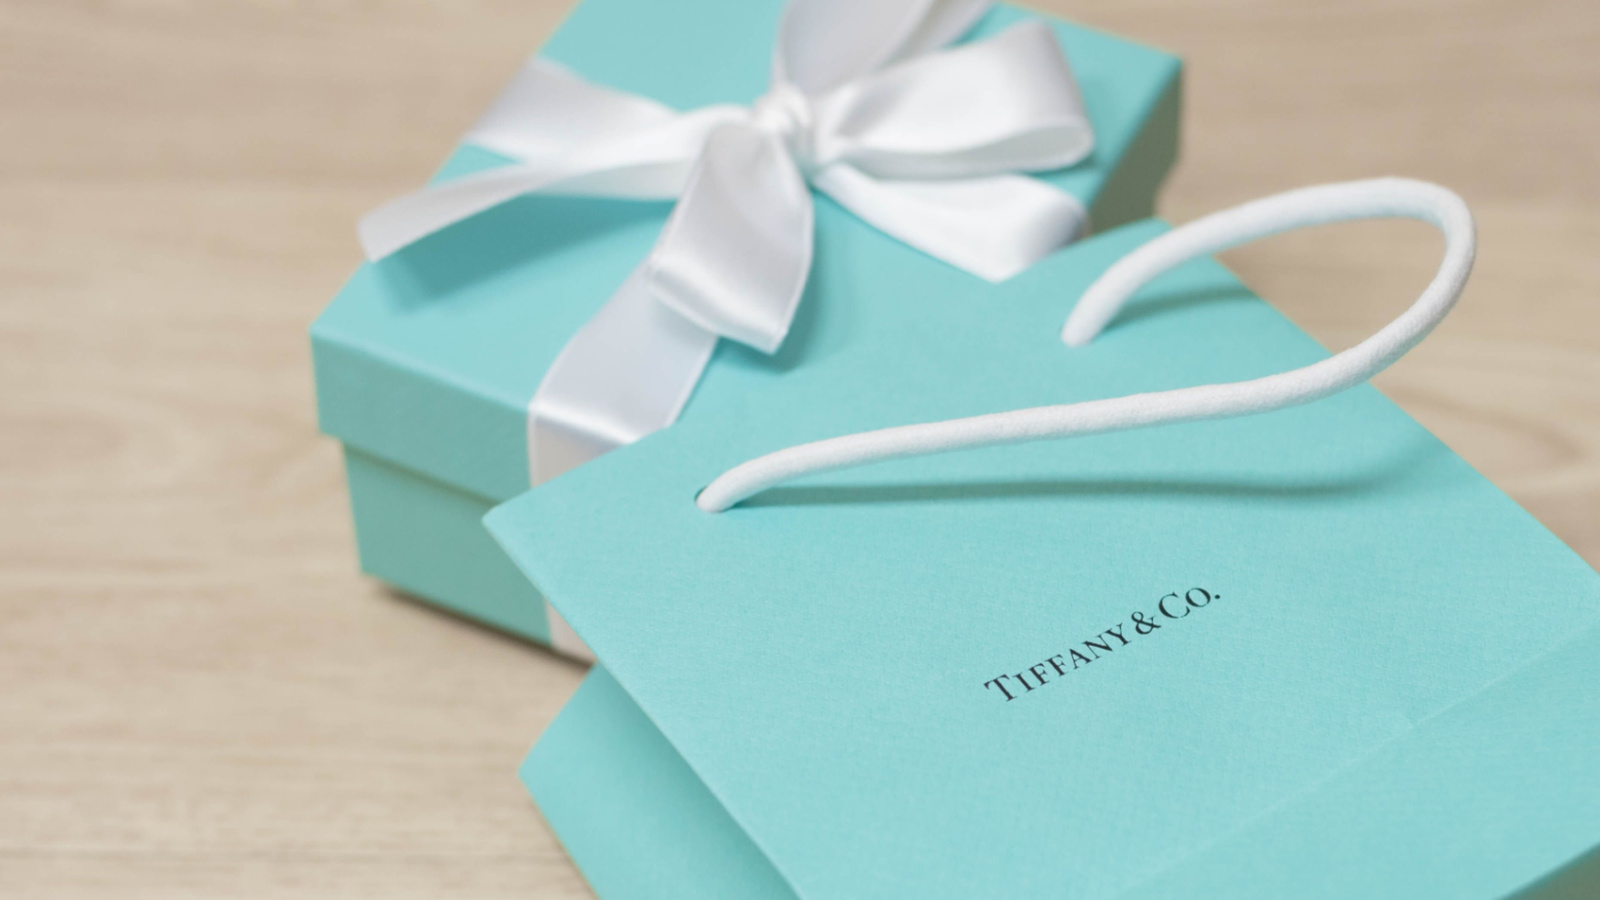 Tiffany & Co. Turns CryptoPunks Into $12.5M Luxury Jewelry Sale - Blockworks